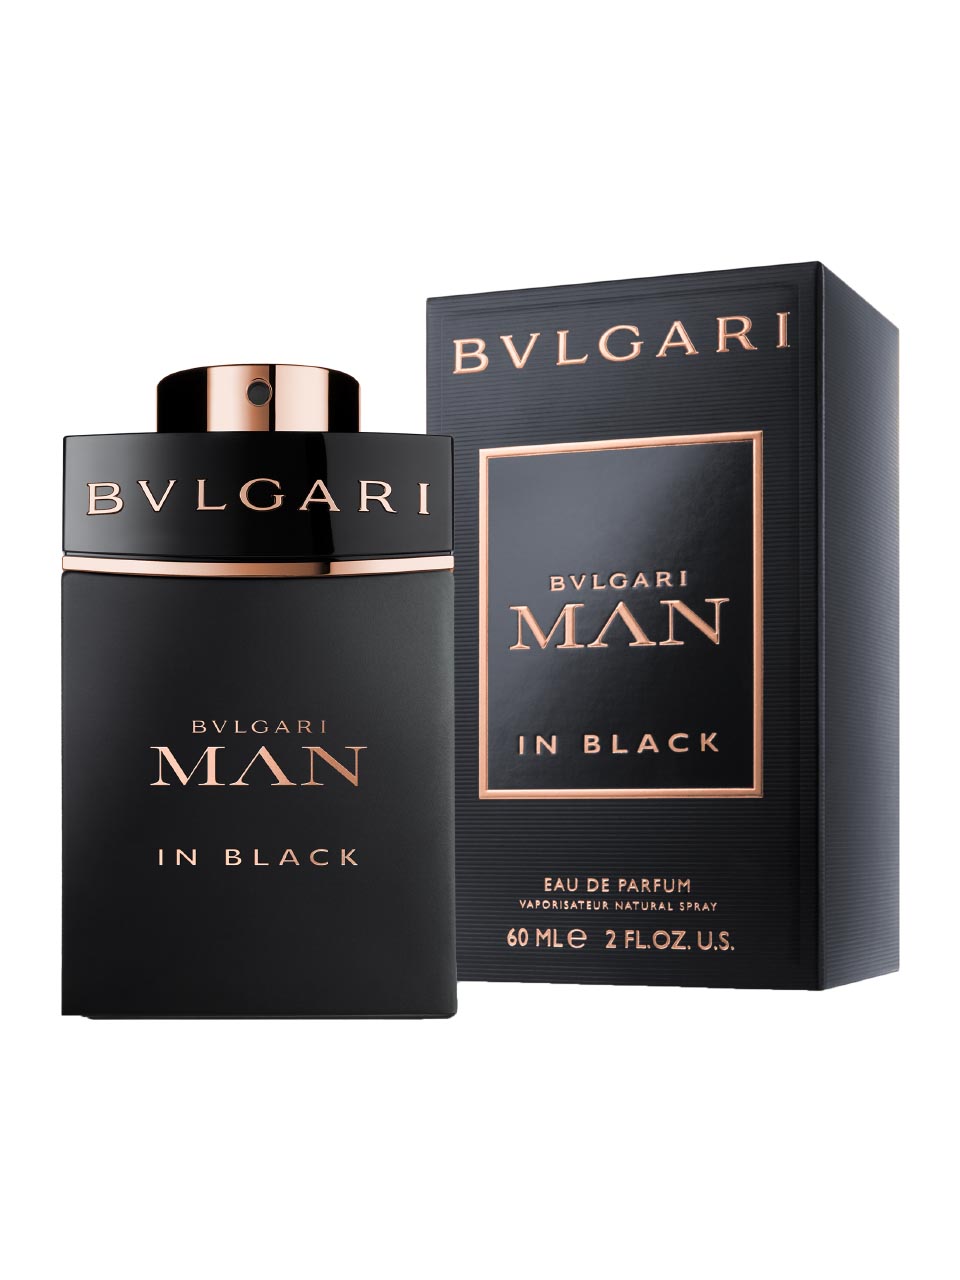 Bvlgari Man in Black Eau de Parfum 60 ml null - onesize - 1